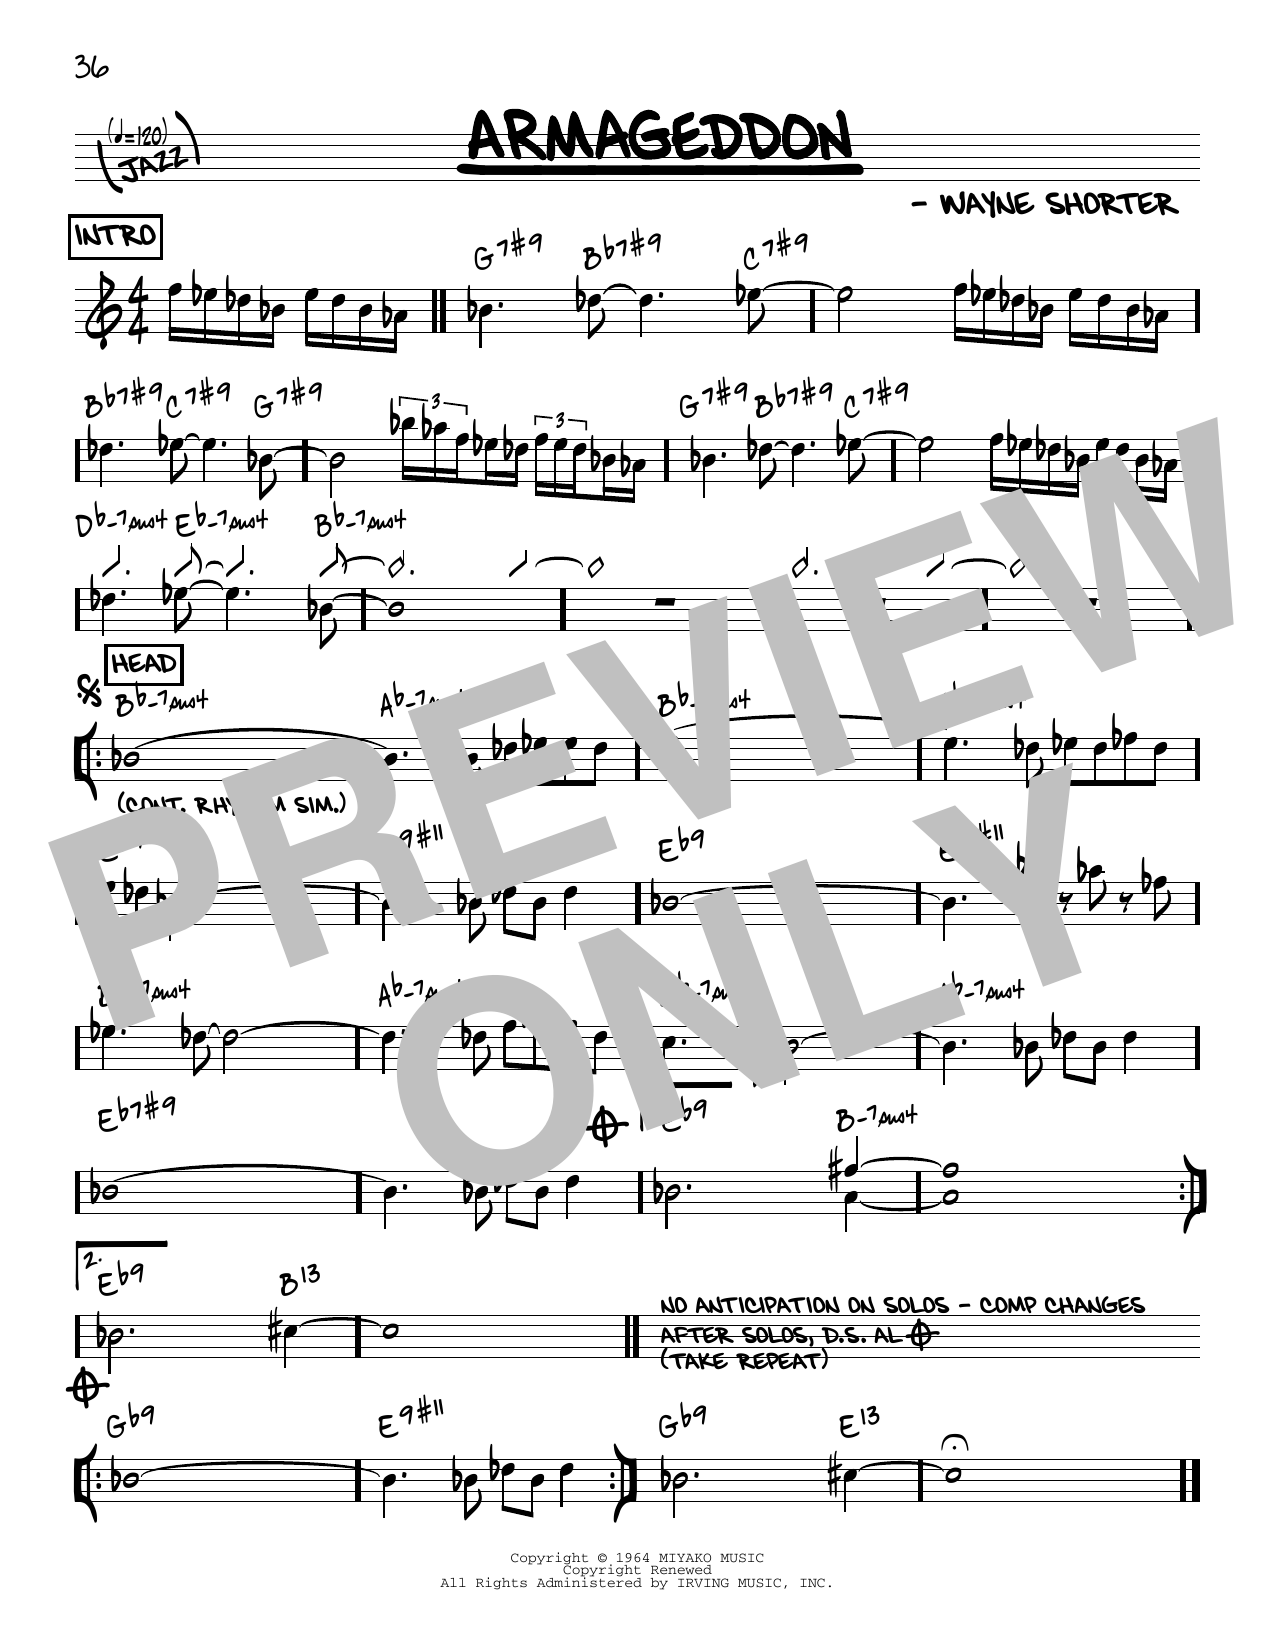 Wayne Shorter Armageddon [Reharmonized version] (arr. Jack Grassel) Sheet Music Notes & Chords for Real Book – Melody & Chords - Download or Print PDF